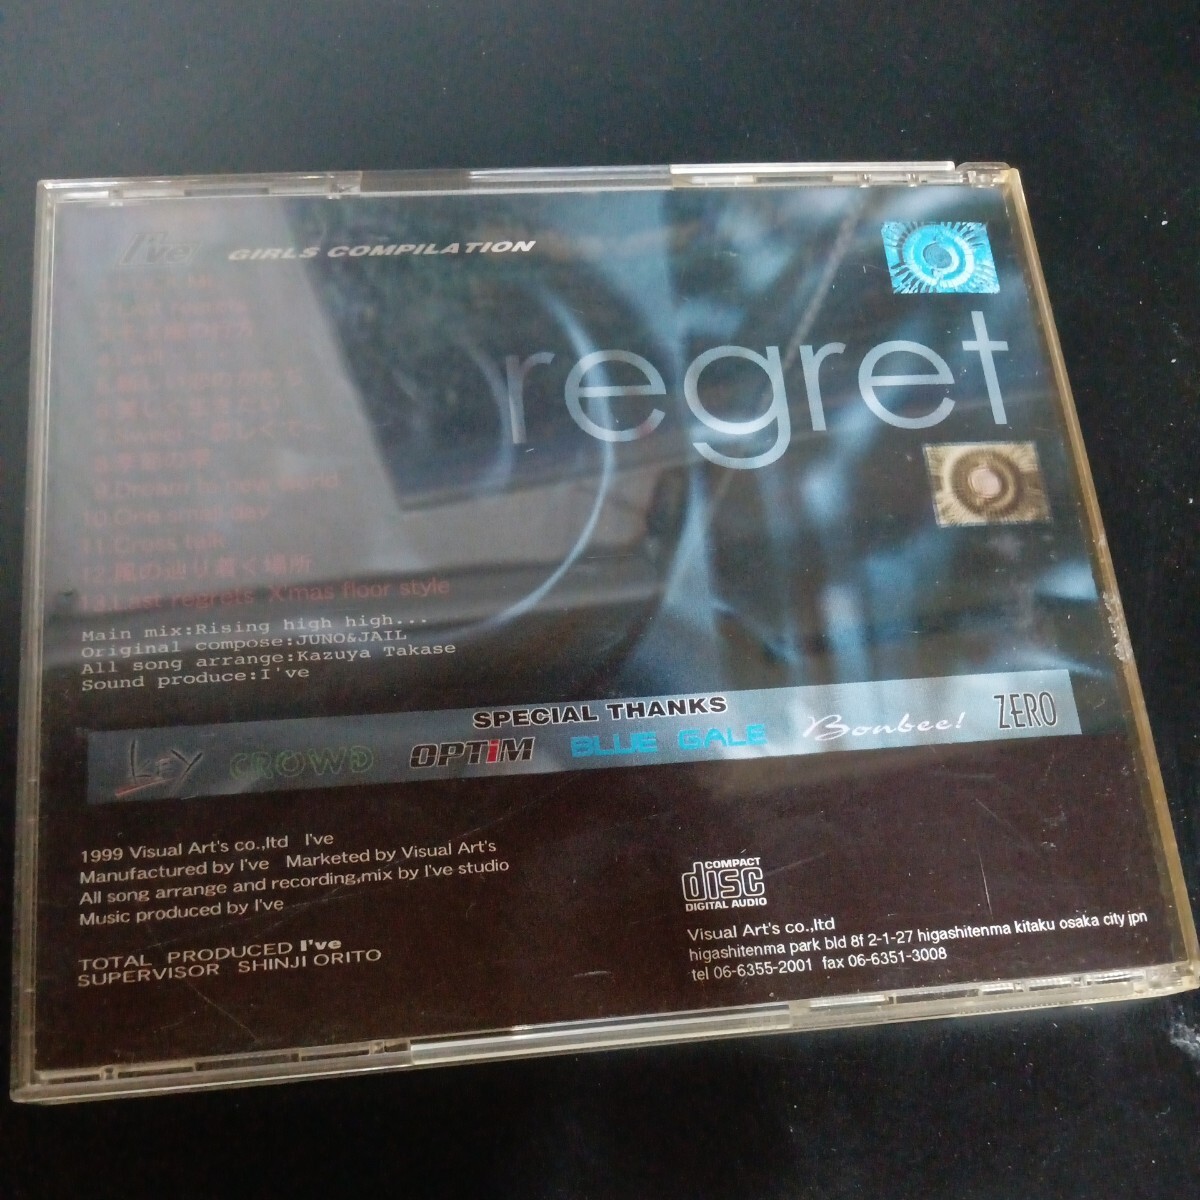 regret CD